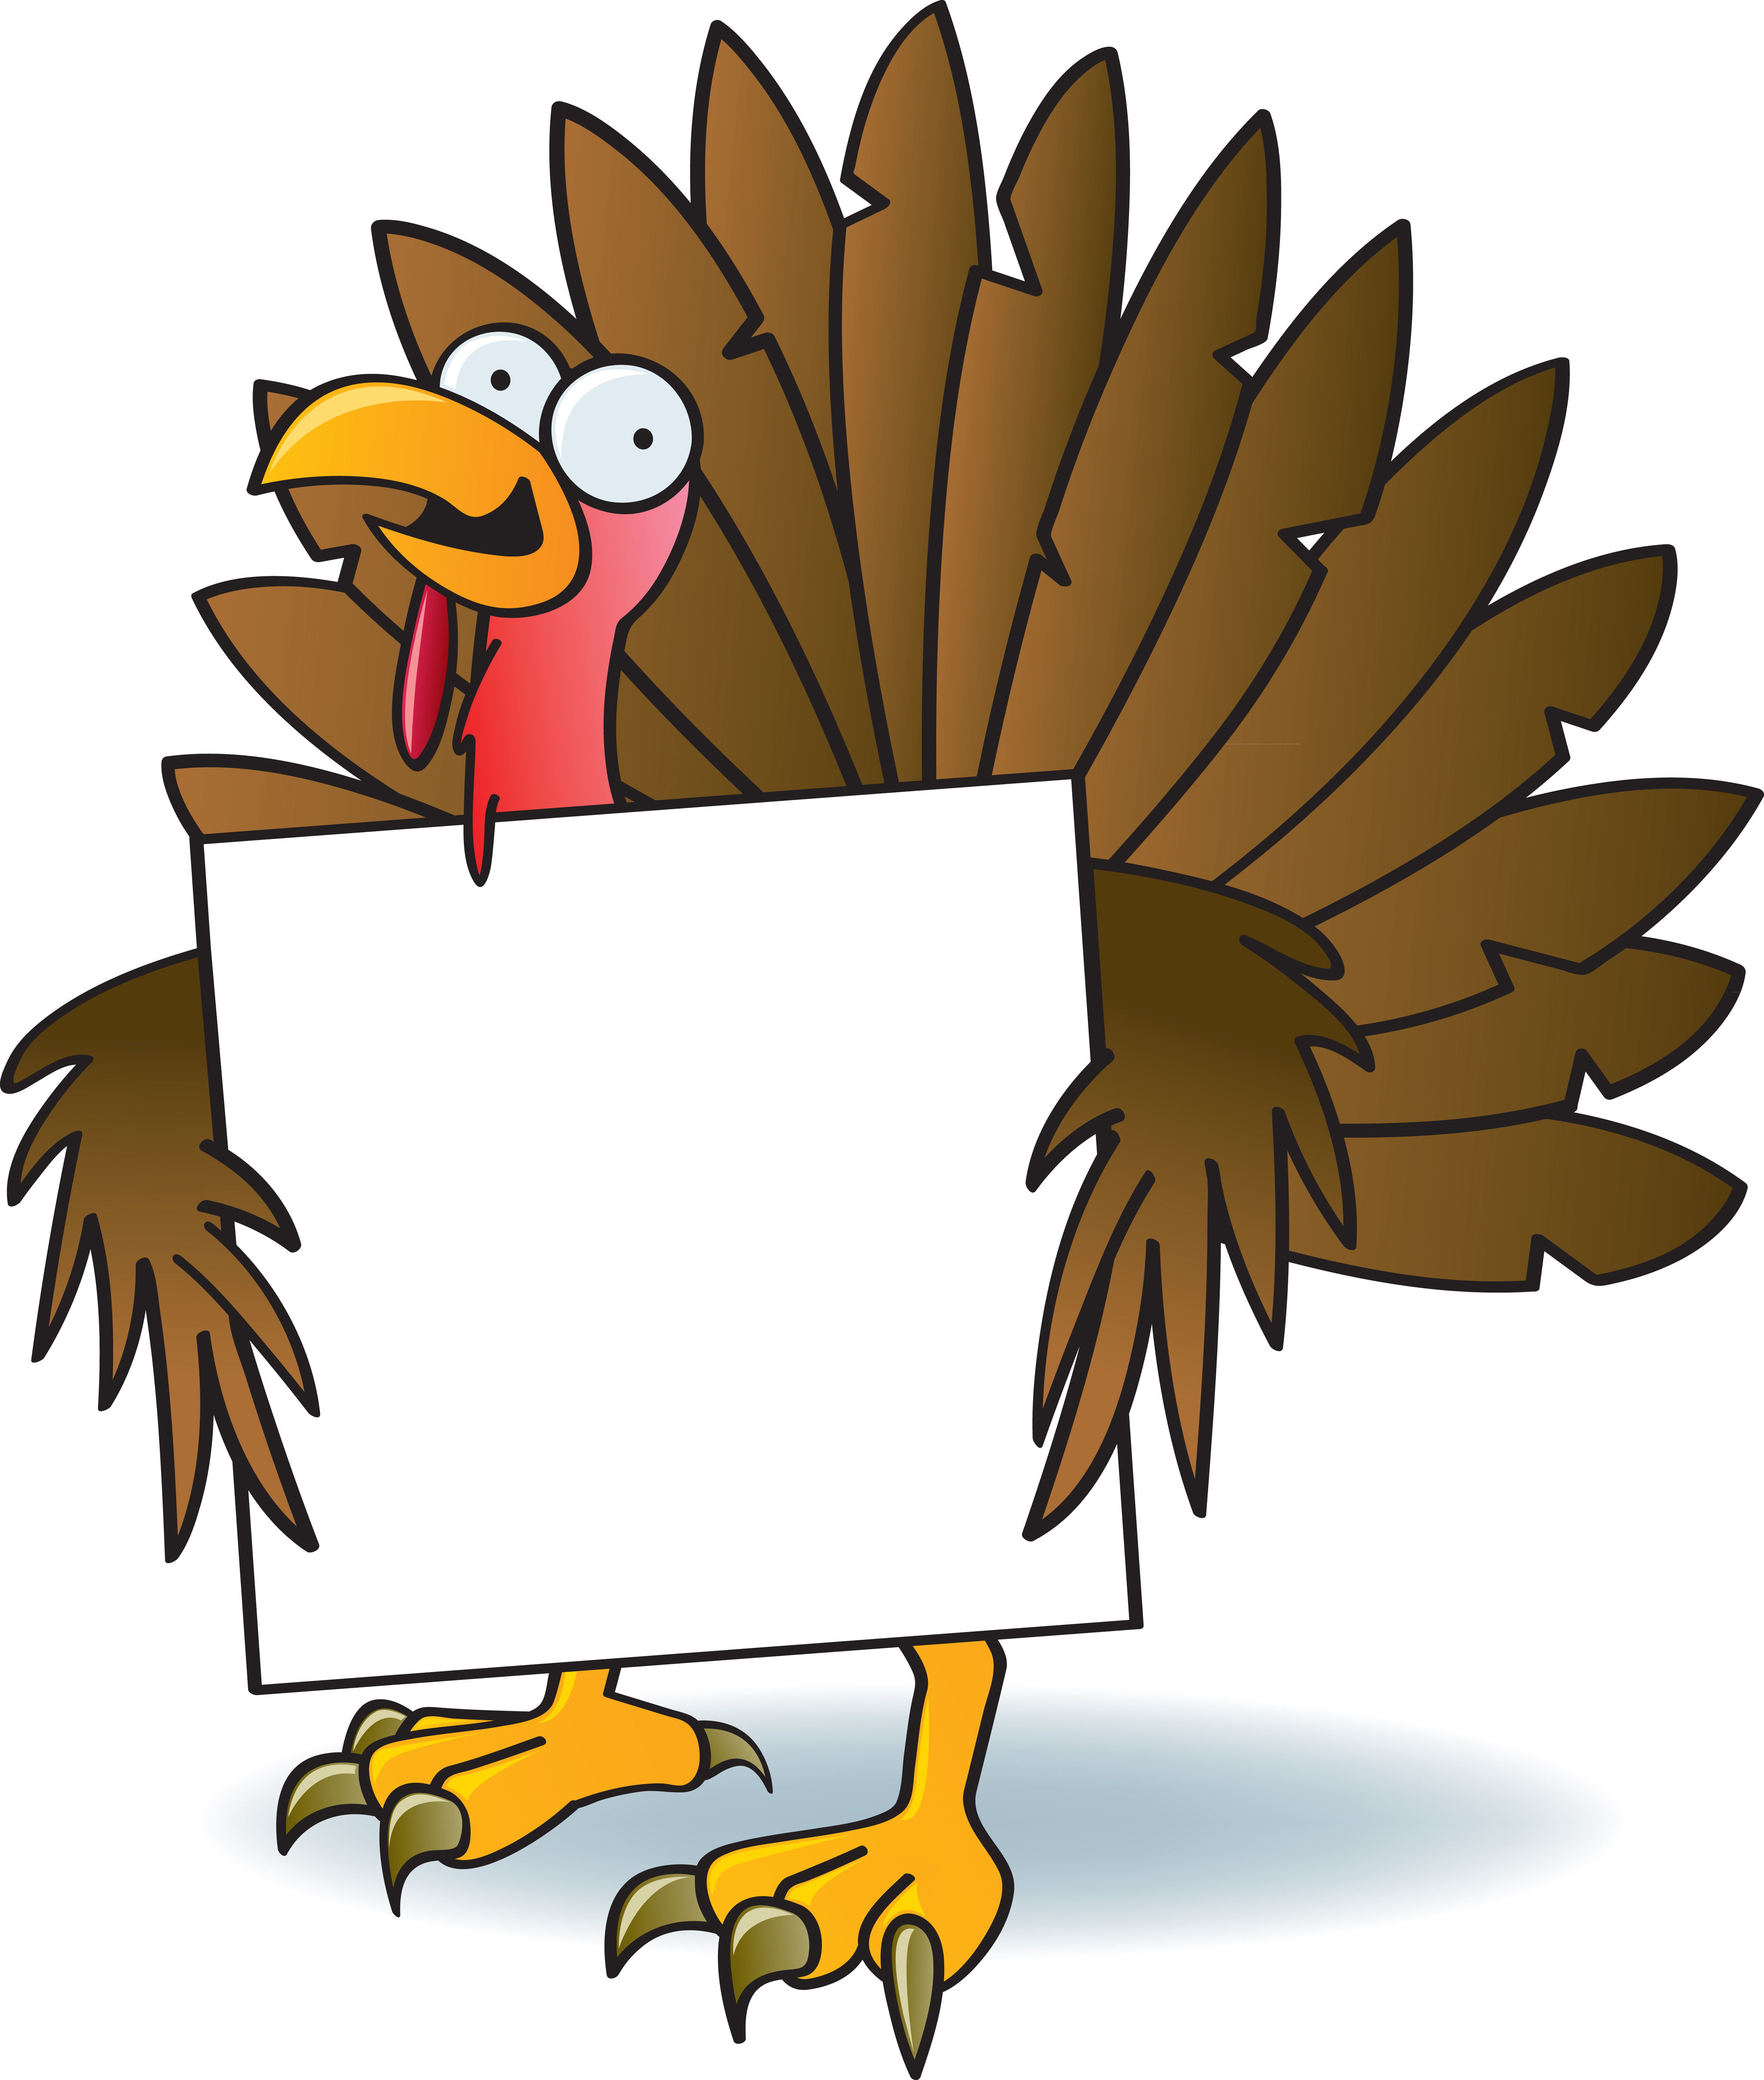 Free Cartoon Thanksgiving Turkey Pictures, Download Free.